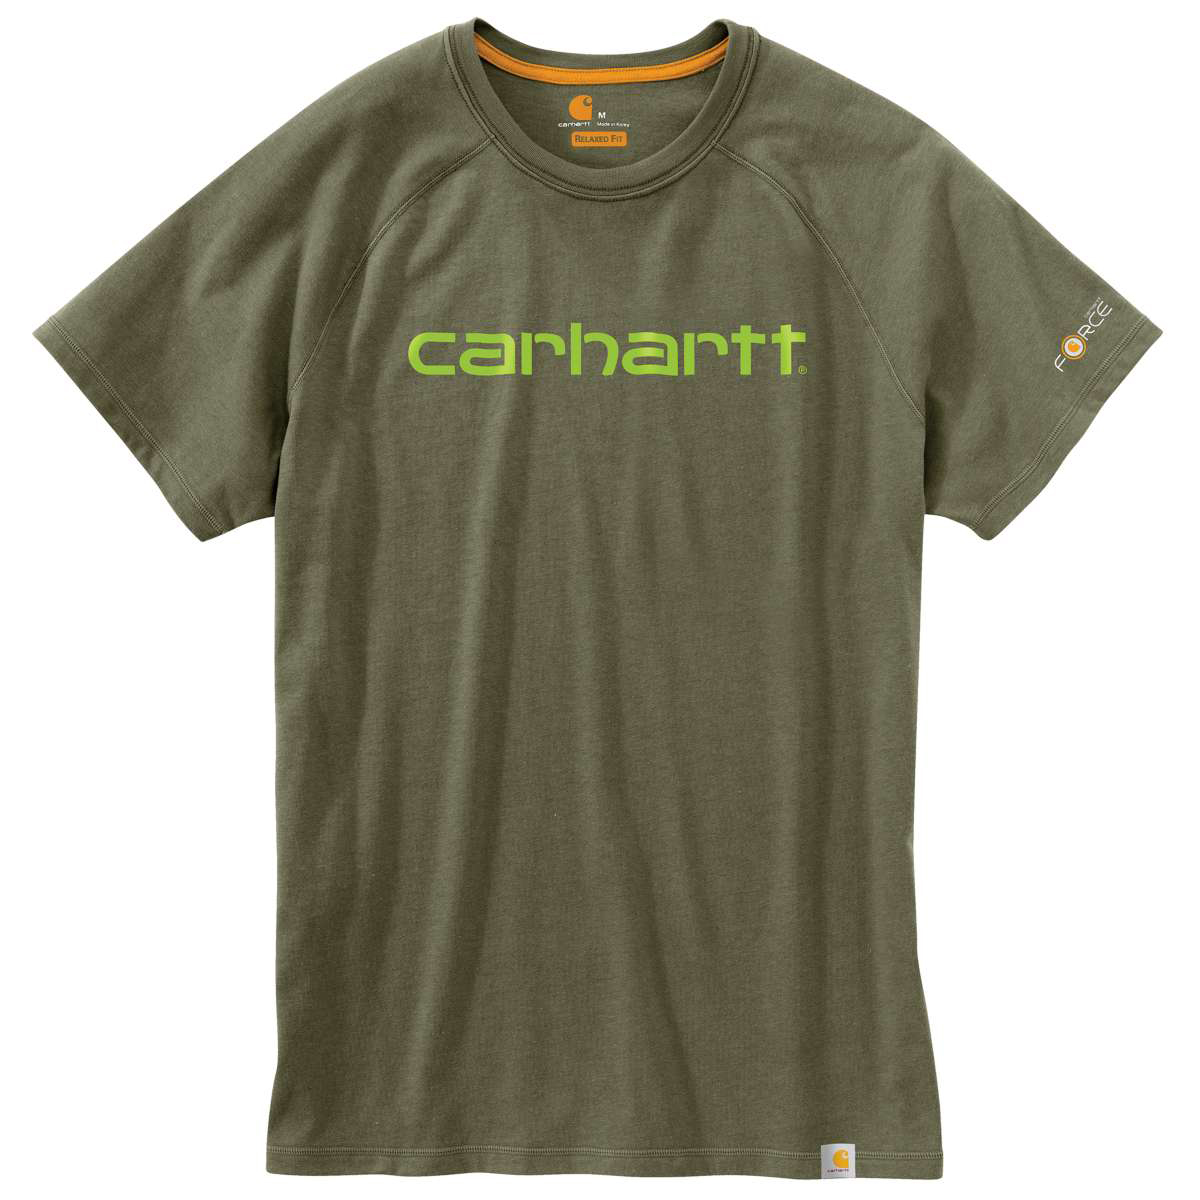 Carhartt Men's Force Cotton Delmont Graphic Short-Sleeve Tee - Green, XL